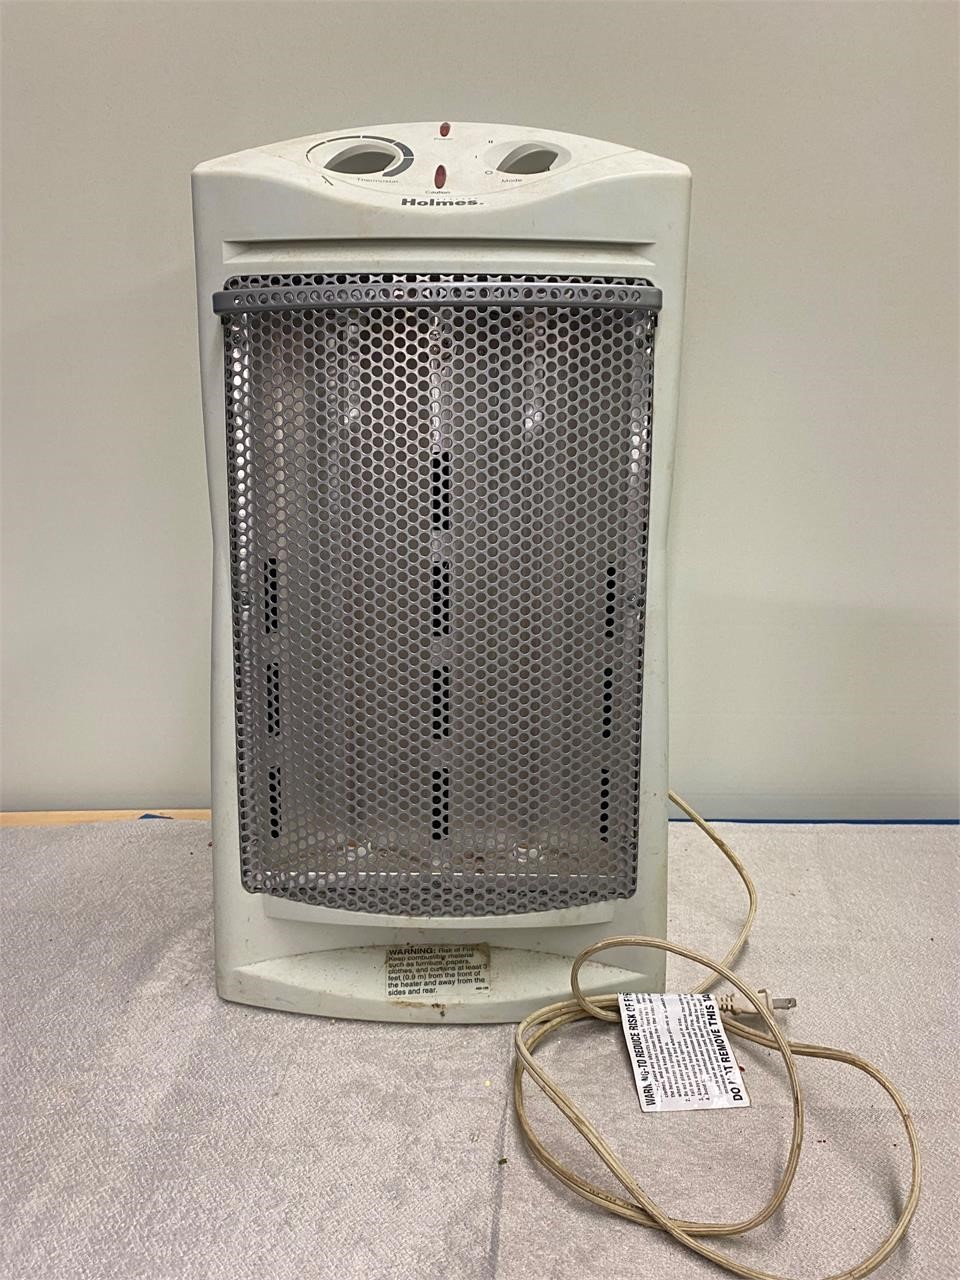 Medium sized plug in heater